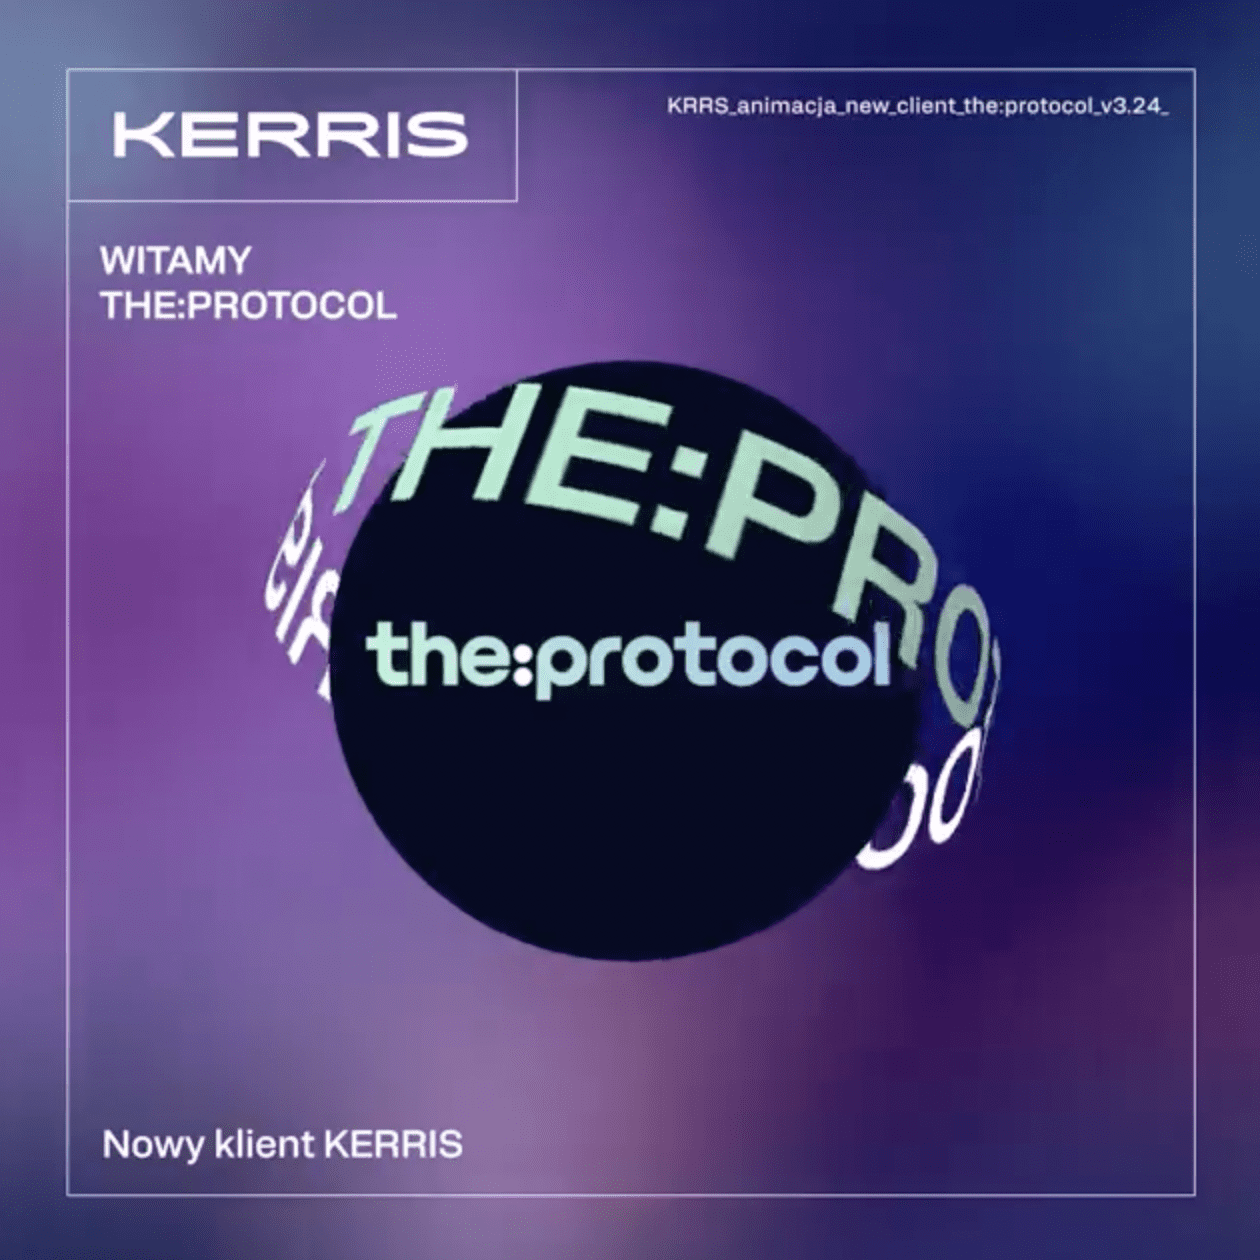 KERRIS x the:protocol!